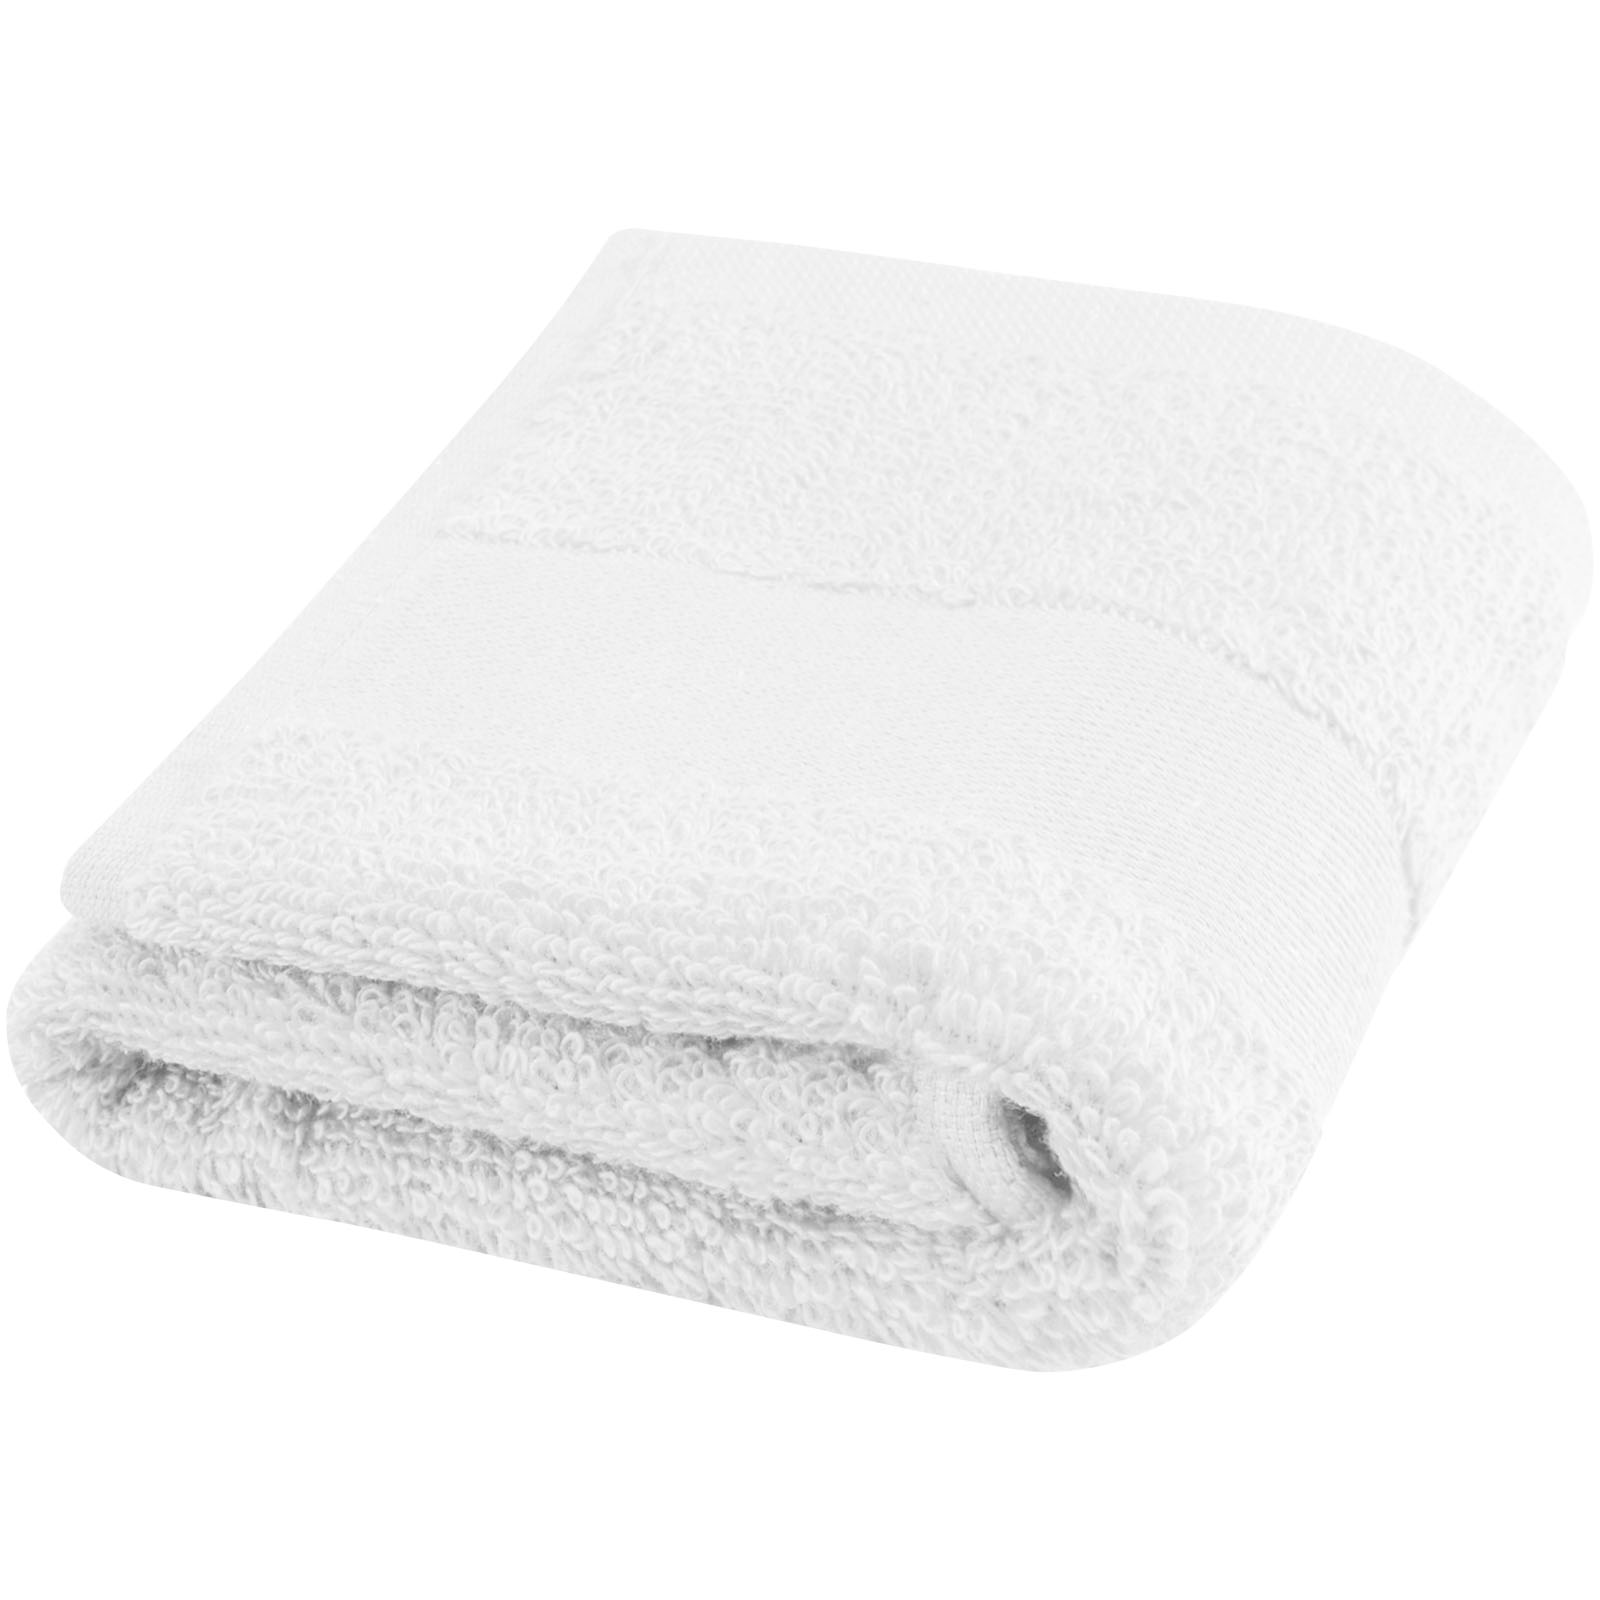 Advertising Towels - Sophia 450 g/m² cotton towel 30x50 cm